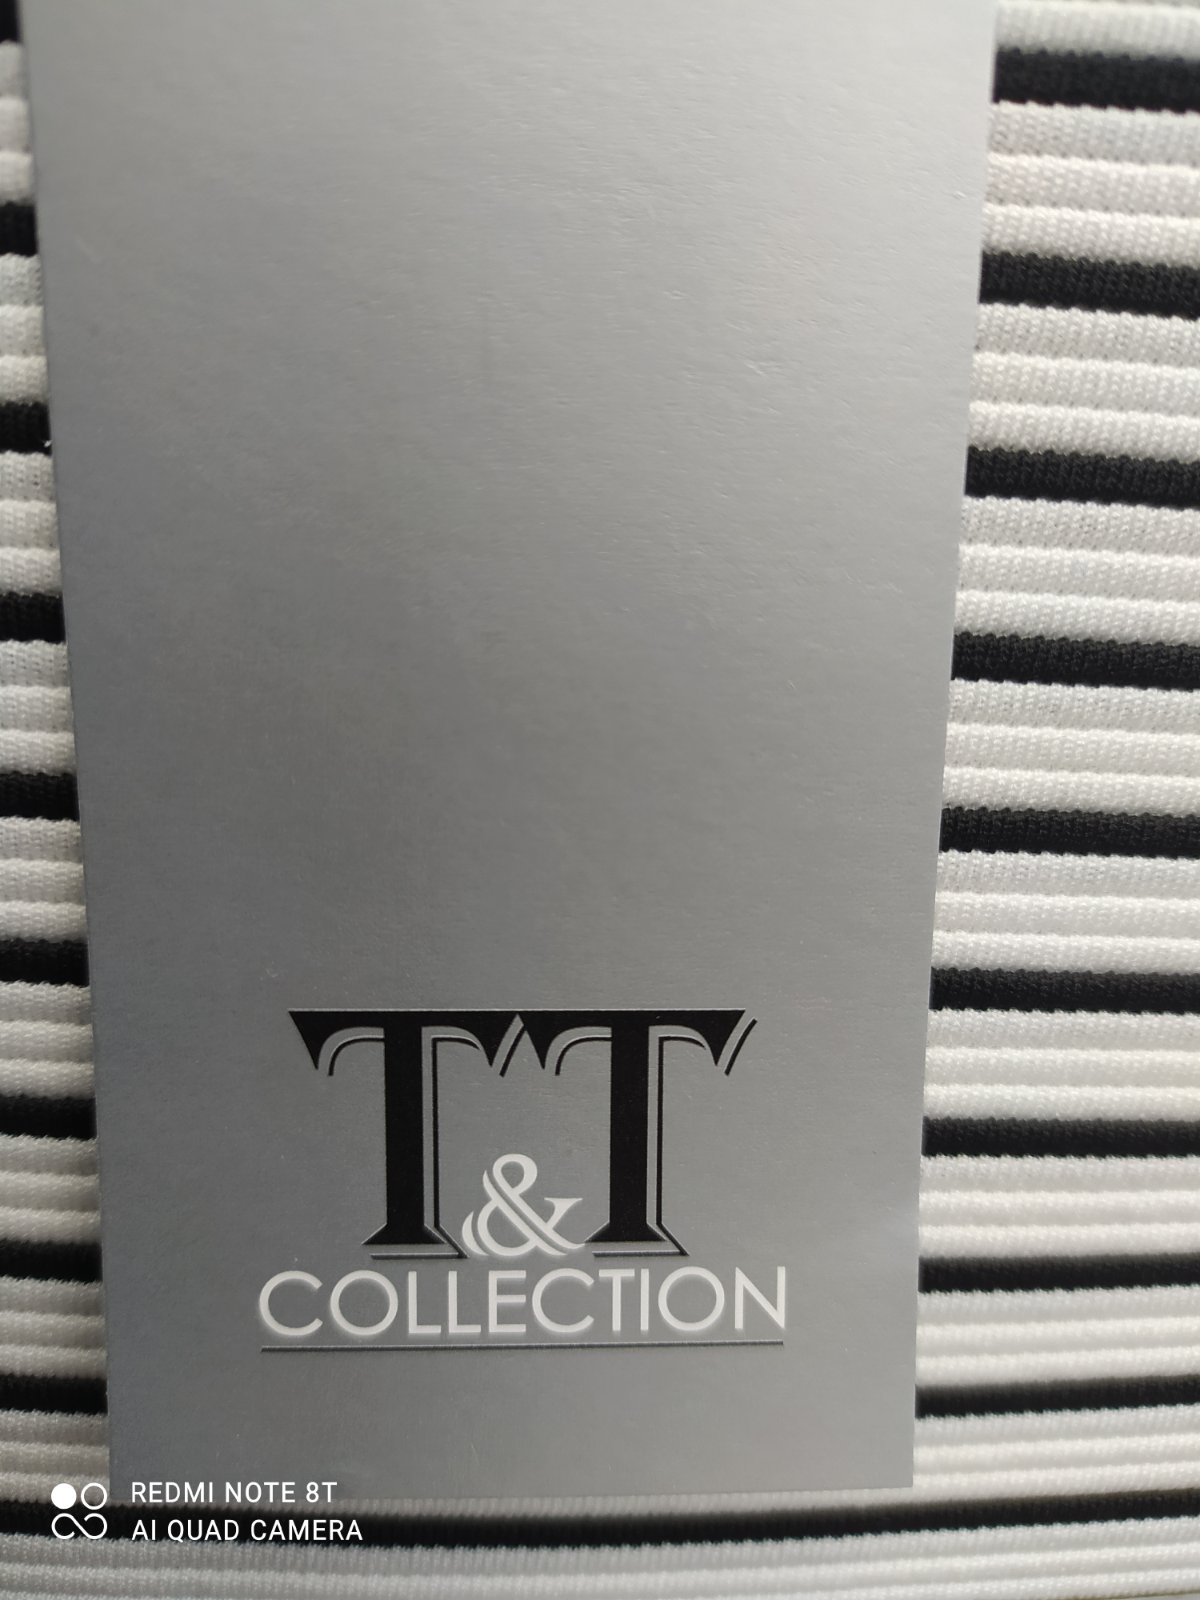 Джемпер ТТ коллекшн 797 черный-серый-серебро